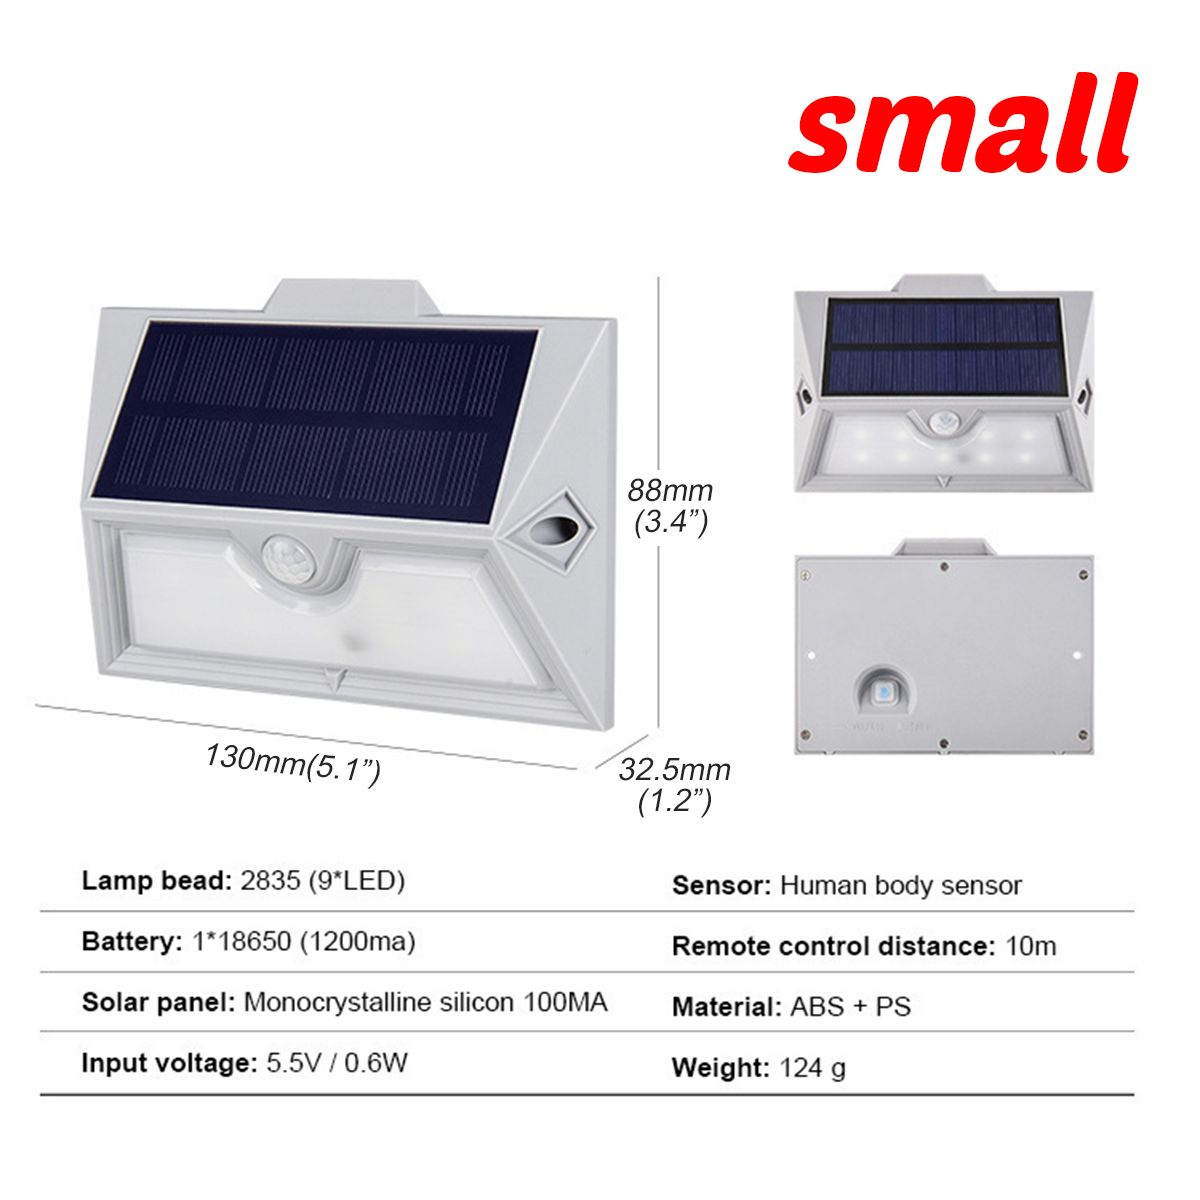 Waterproof-PIR-Motion-Sensor-92133LED-Solar-Power-Wall-Light-Outdoor-Garden-Yard-Home-Lamp-1735532